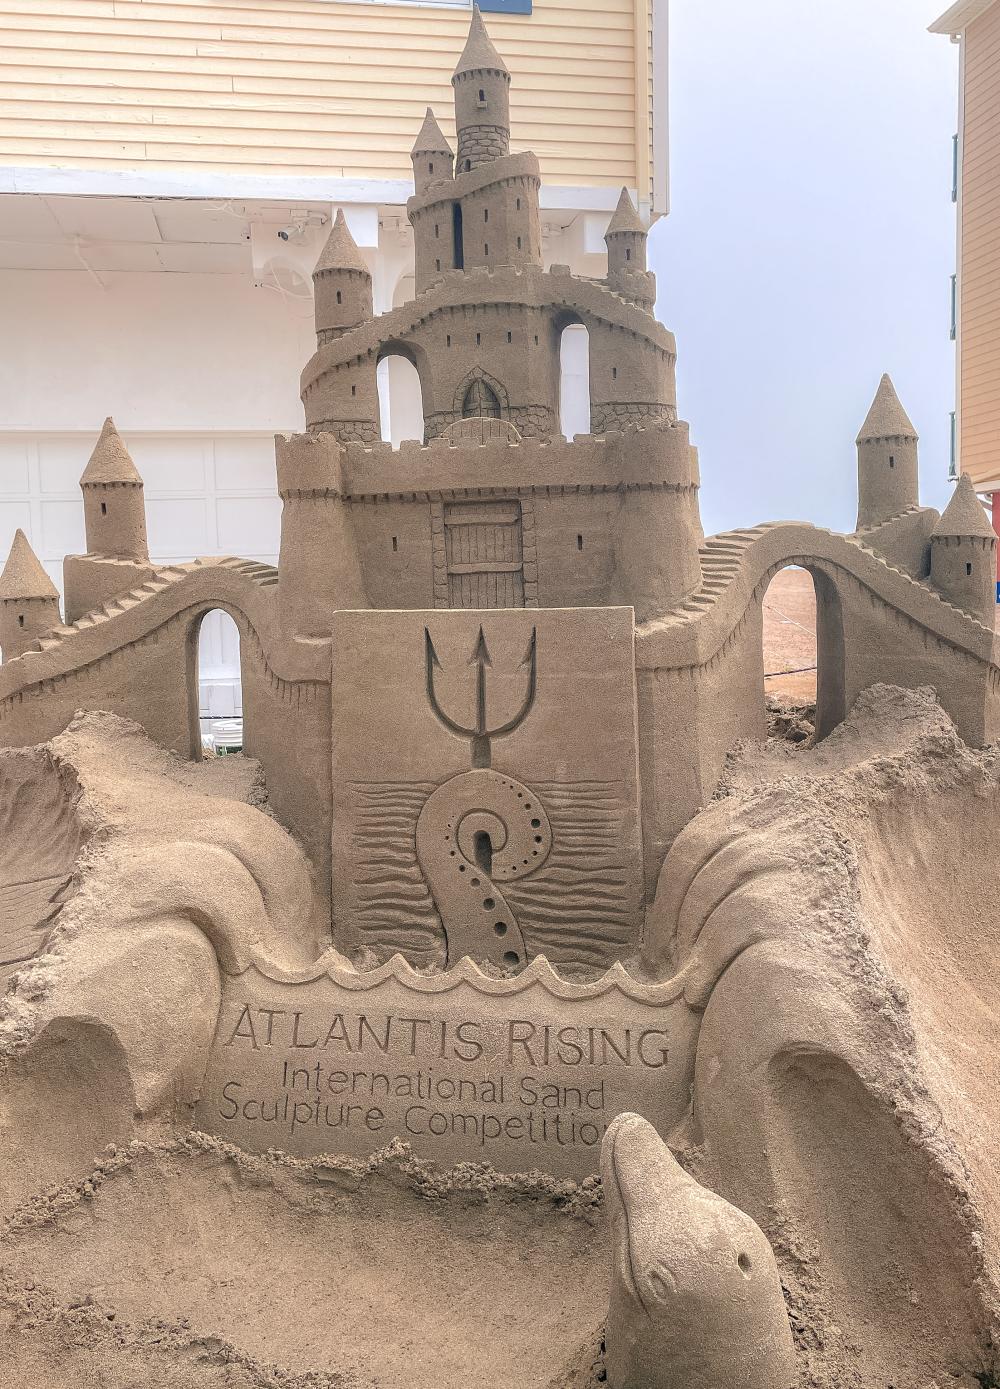 Atlantis Rising Sand Sculpture by John Gowdy